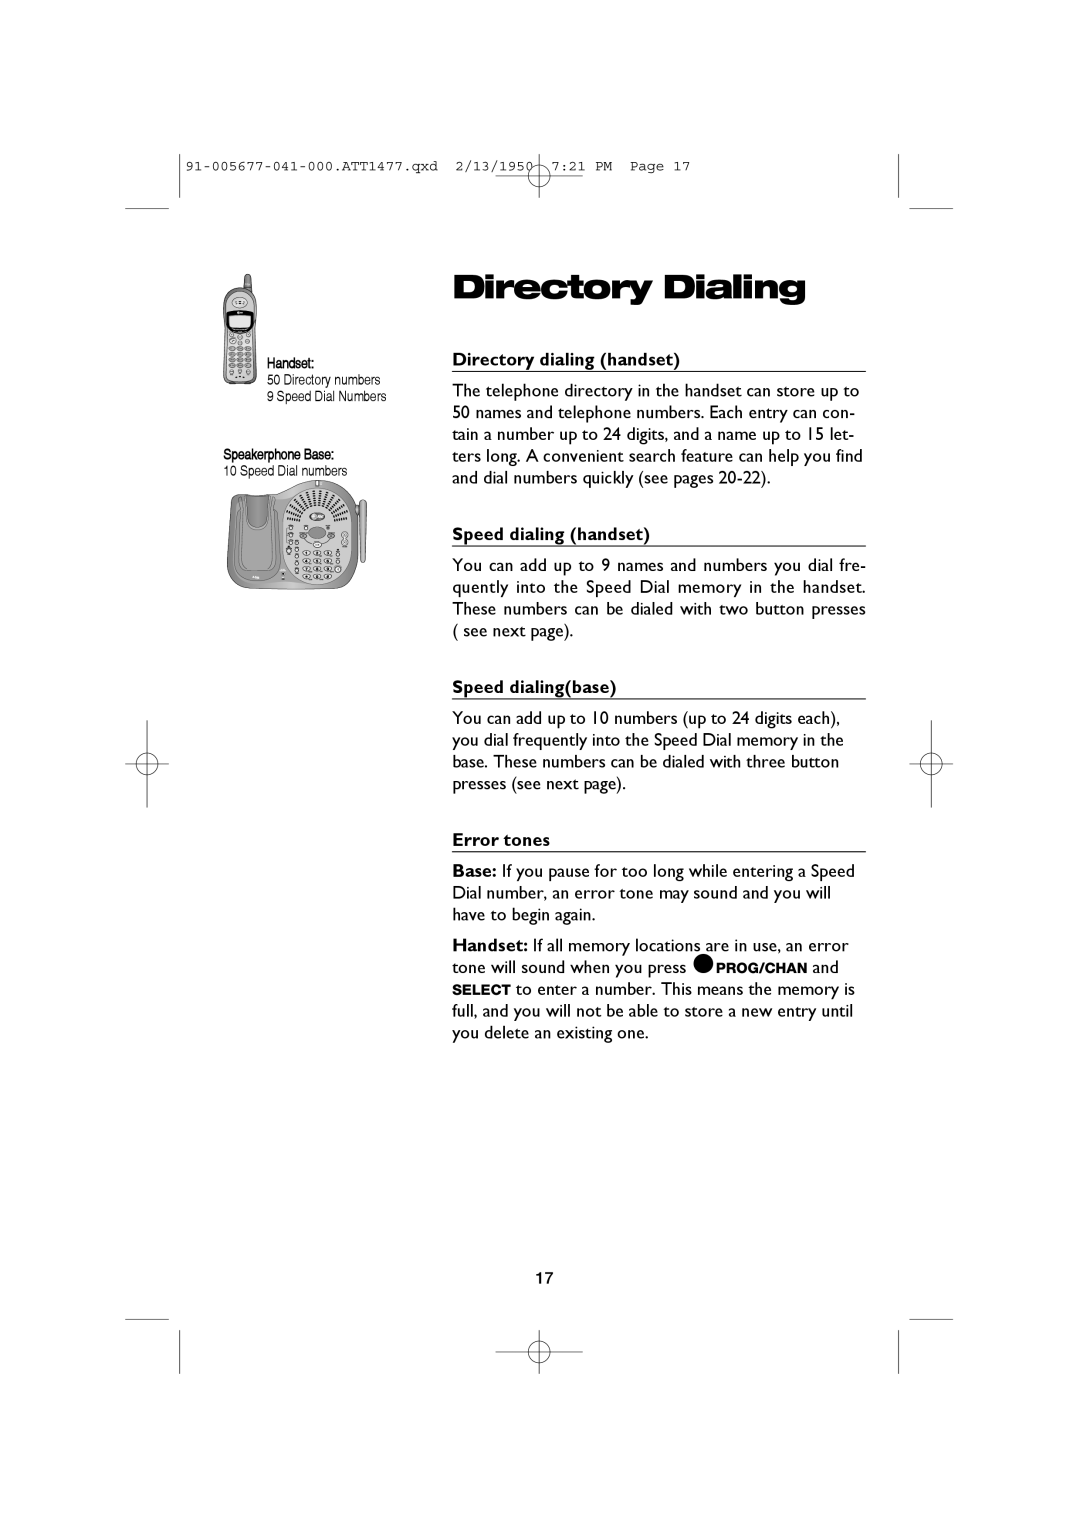 AT&T 1177 user manual Directory Dialing, Directory dialing handset, Speed dialing handset, Speed dialingbase, Error tones 